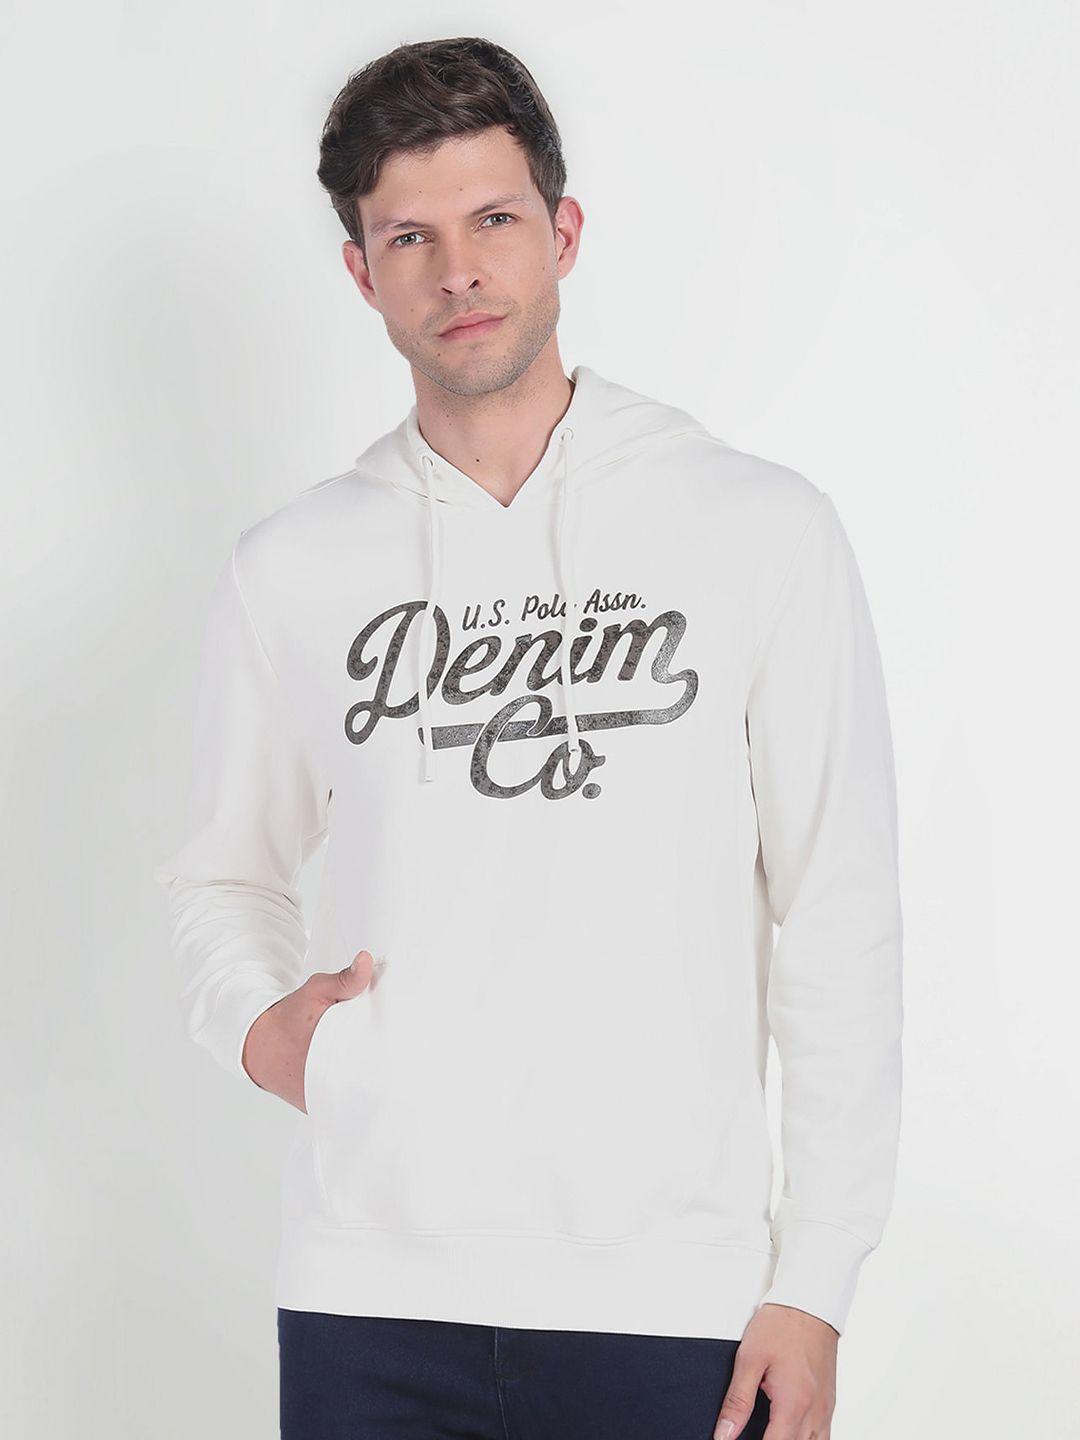 u.s. polo assn. denim co. typography printed hooded sweatshirt